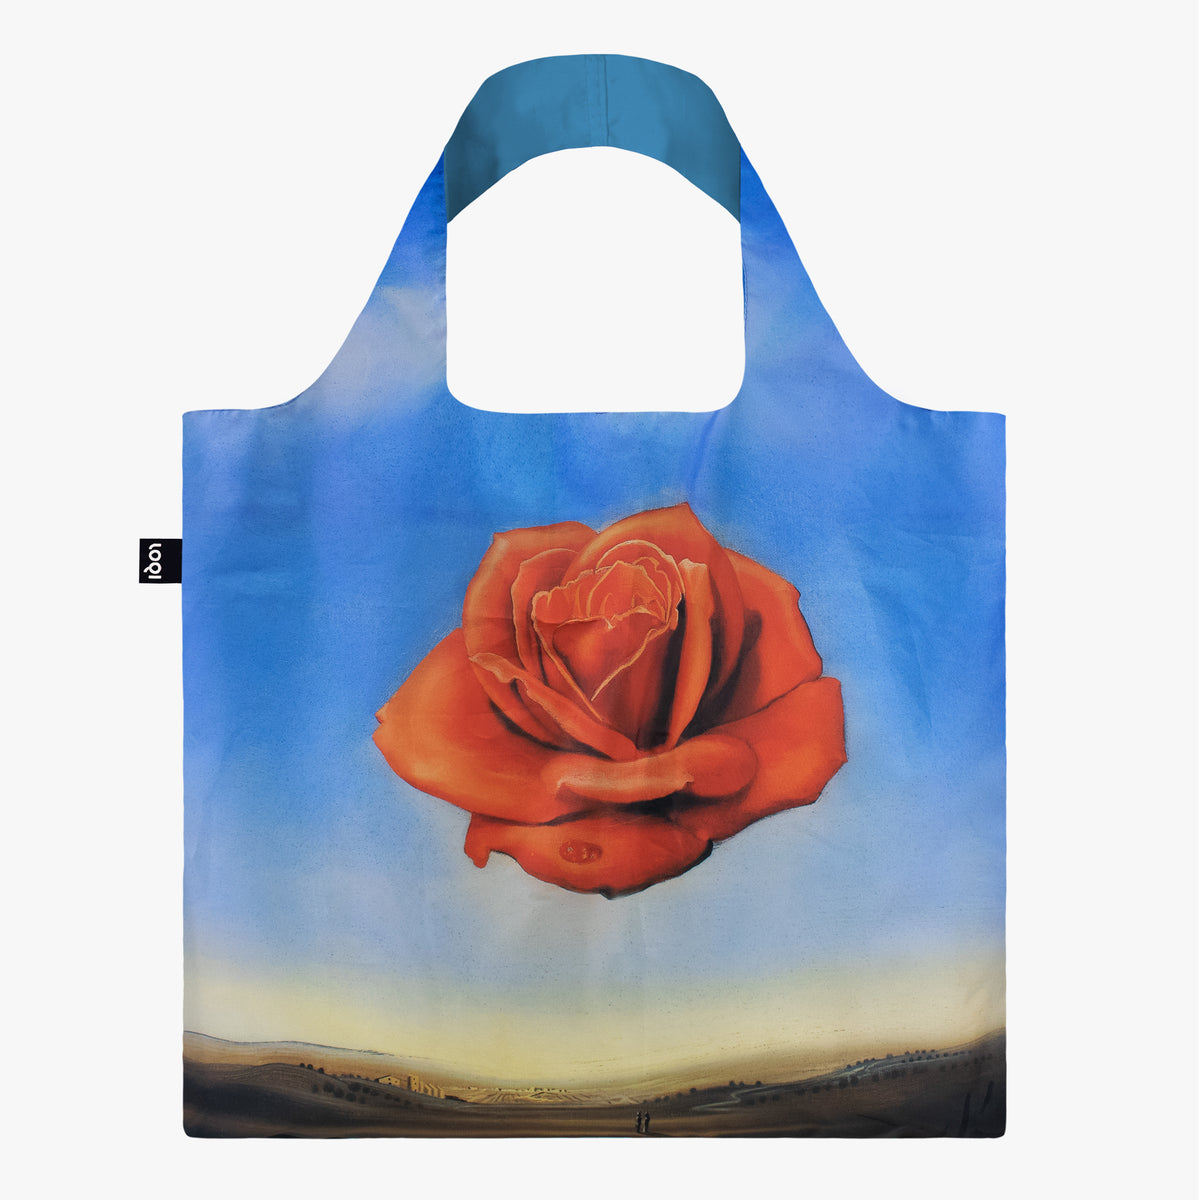 Meditative Rose Recycled Bag